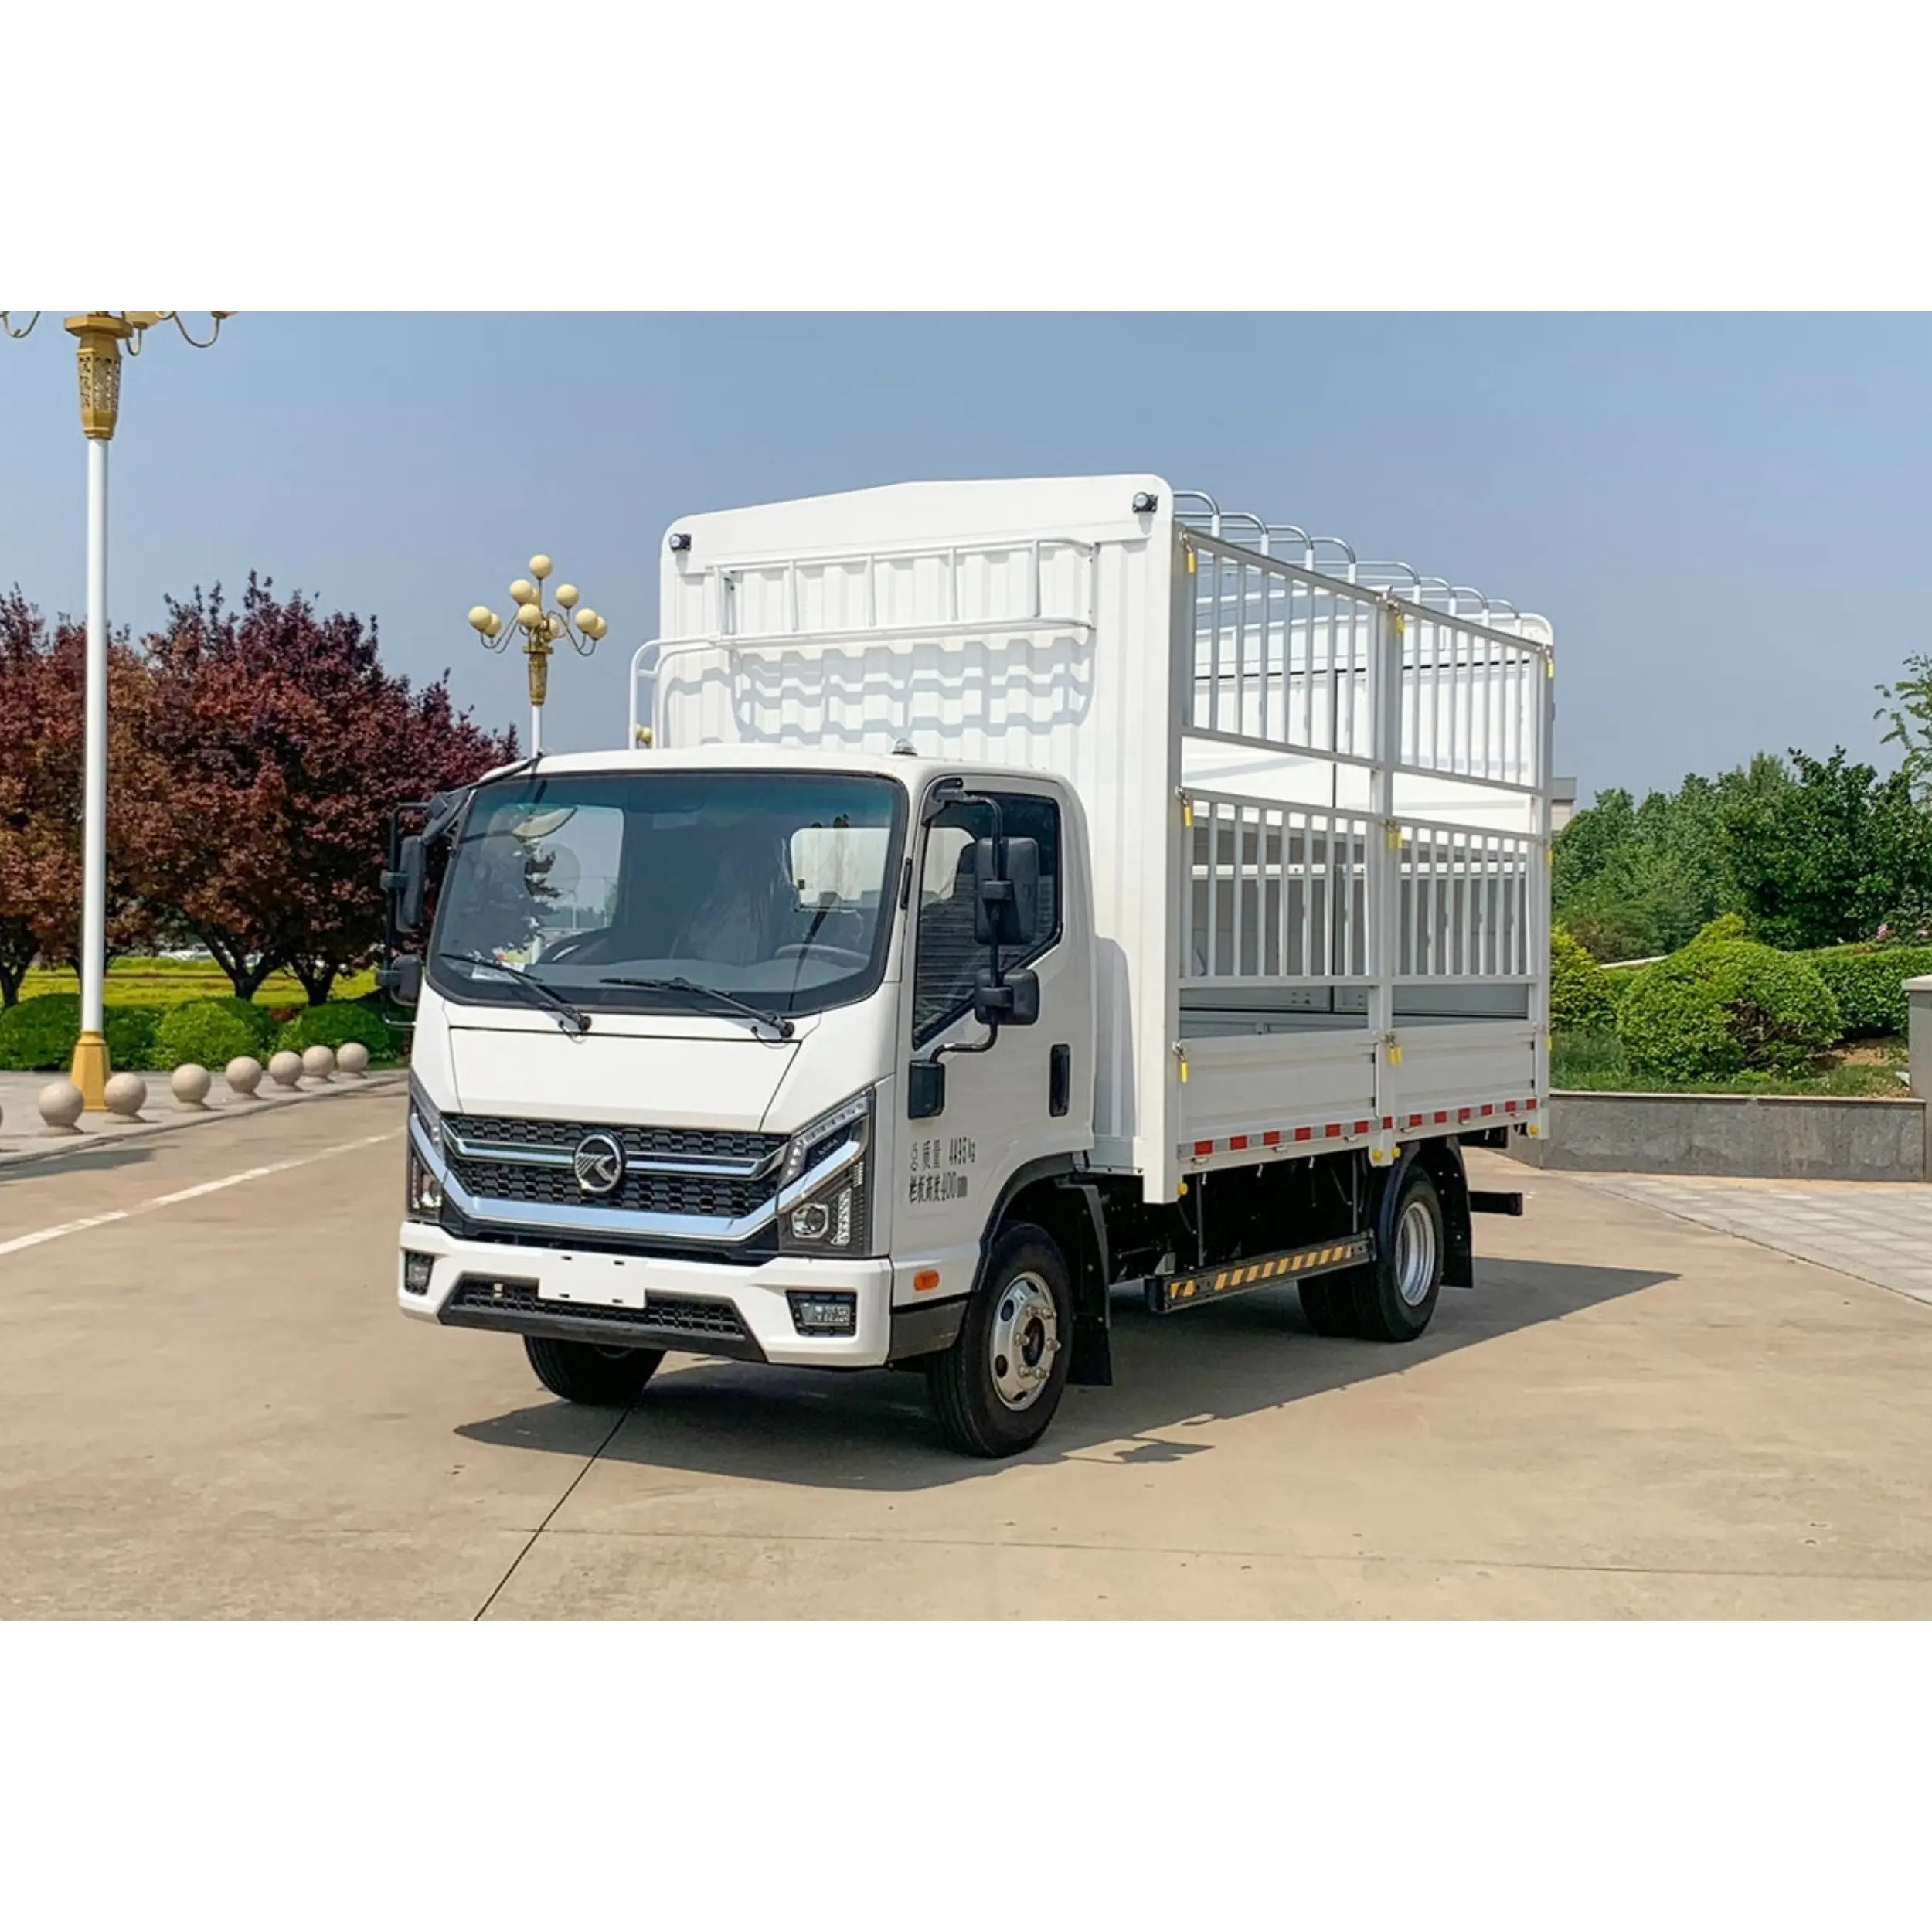 Piccolo LHD RHD food van frigorifero Box Truck -18 ~ 5 freezer camion cella frigorifera furgone